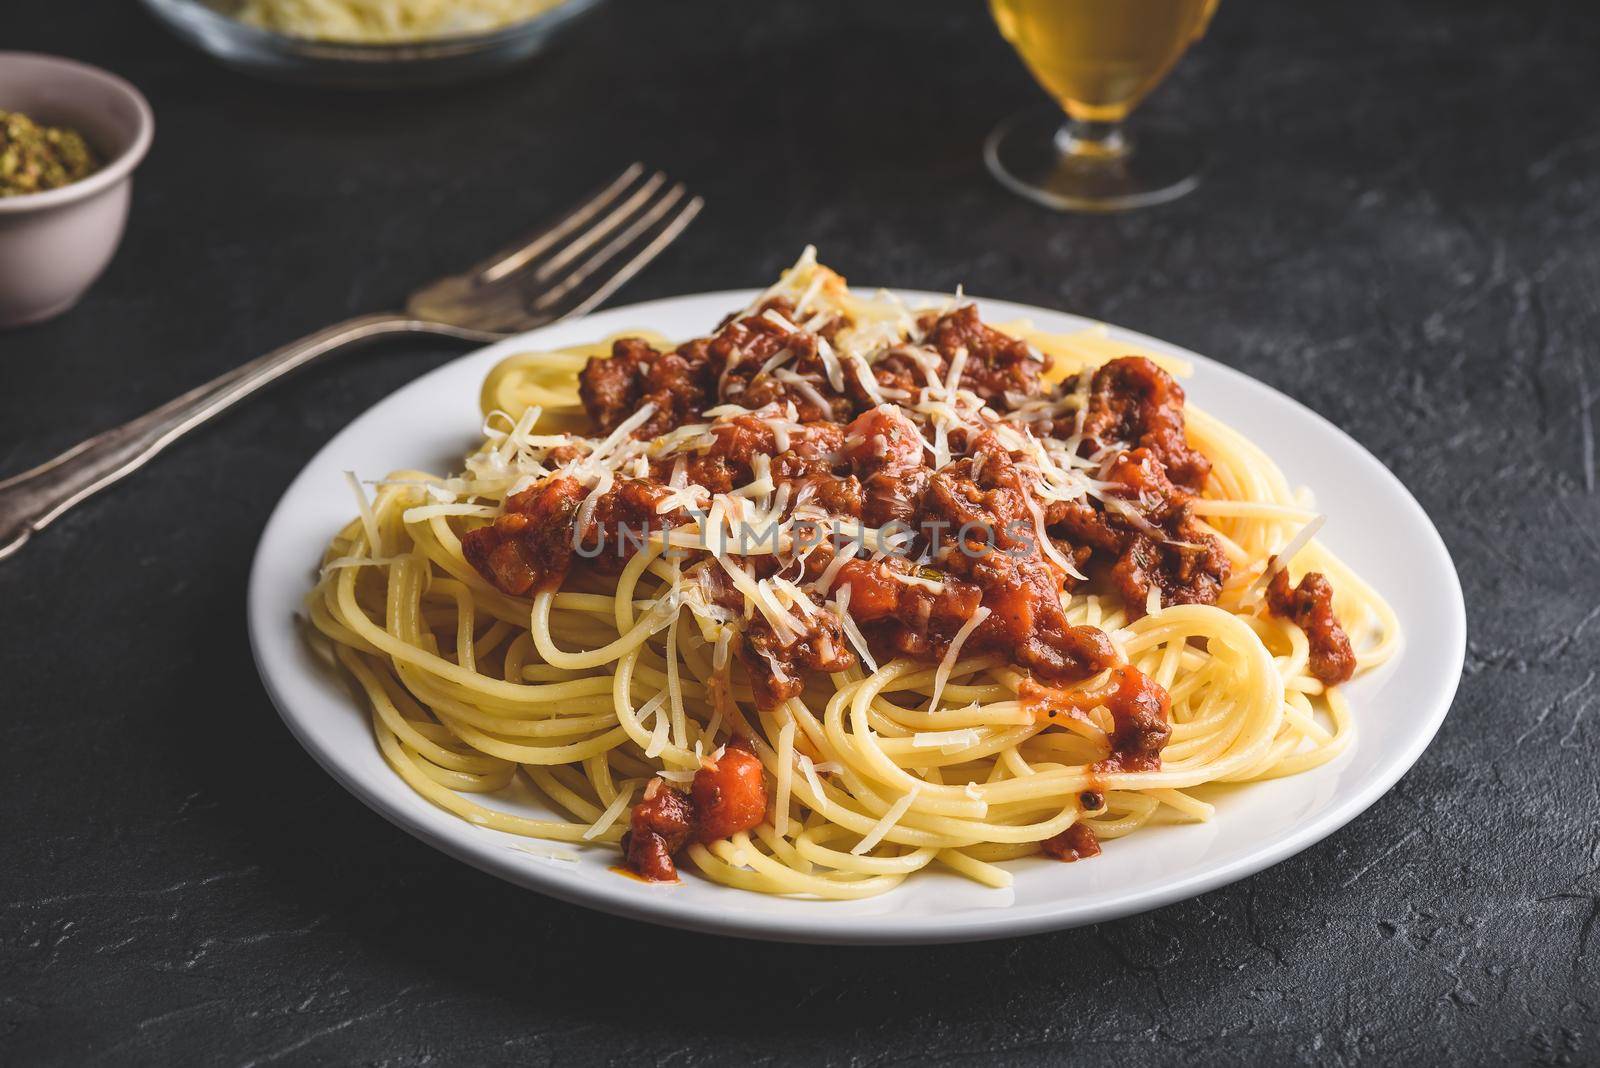 Spaghetti with bolognese sauce by Seva_blsv